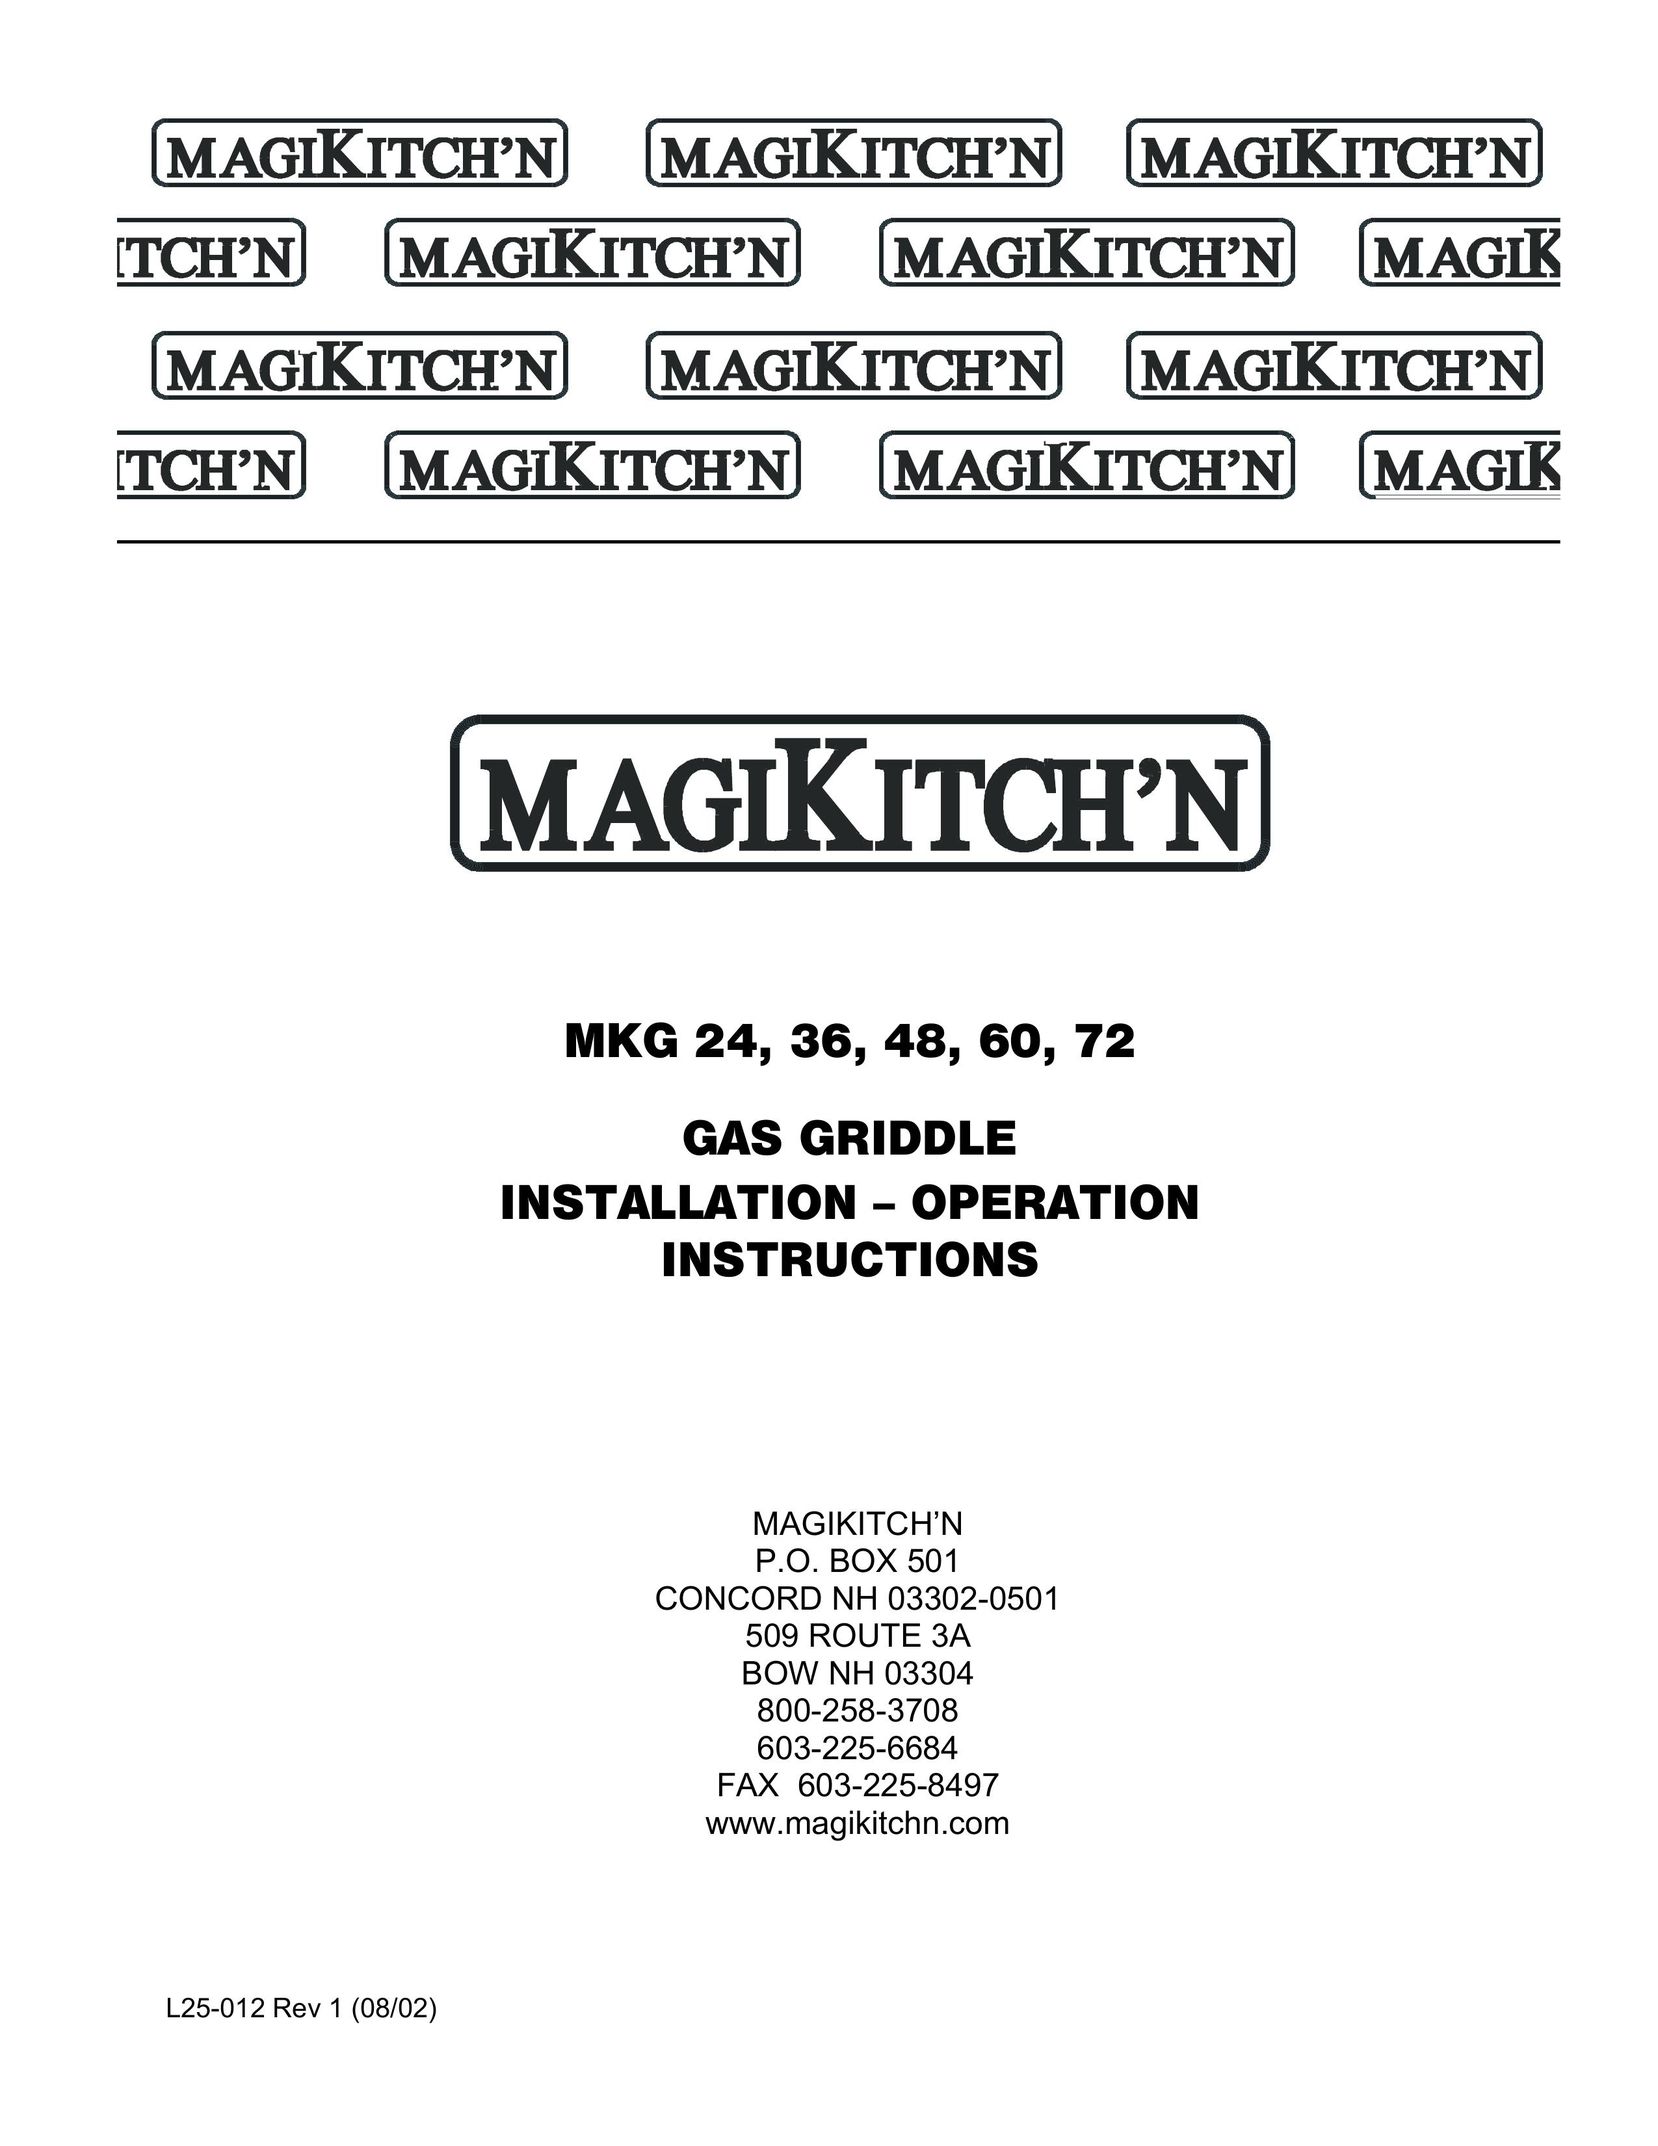 Magikitch'n MKG72 Griddle User Manual